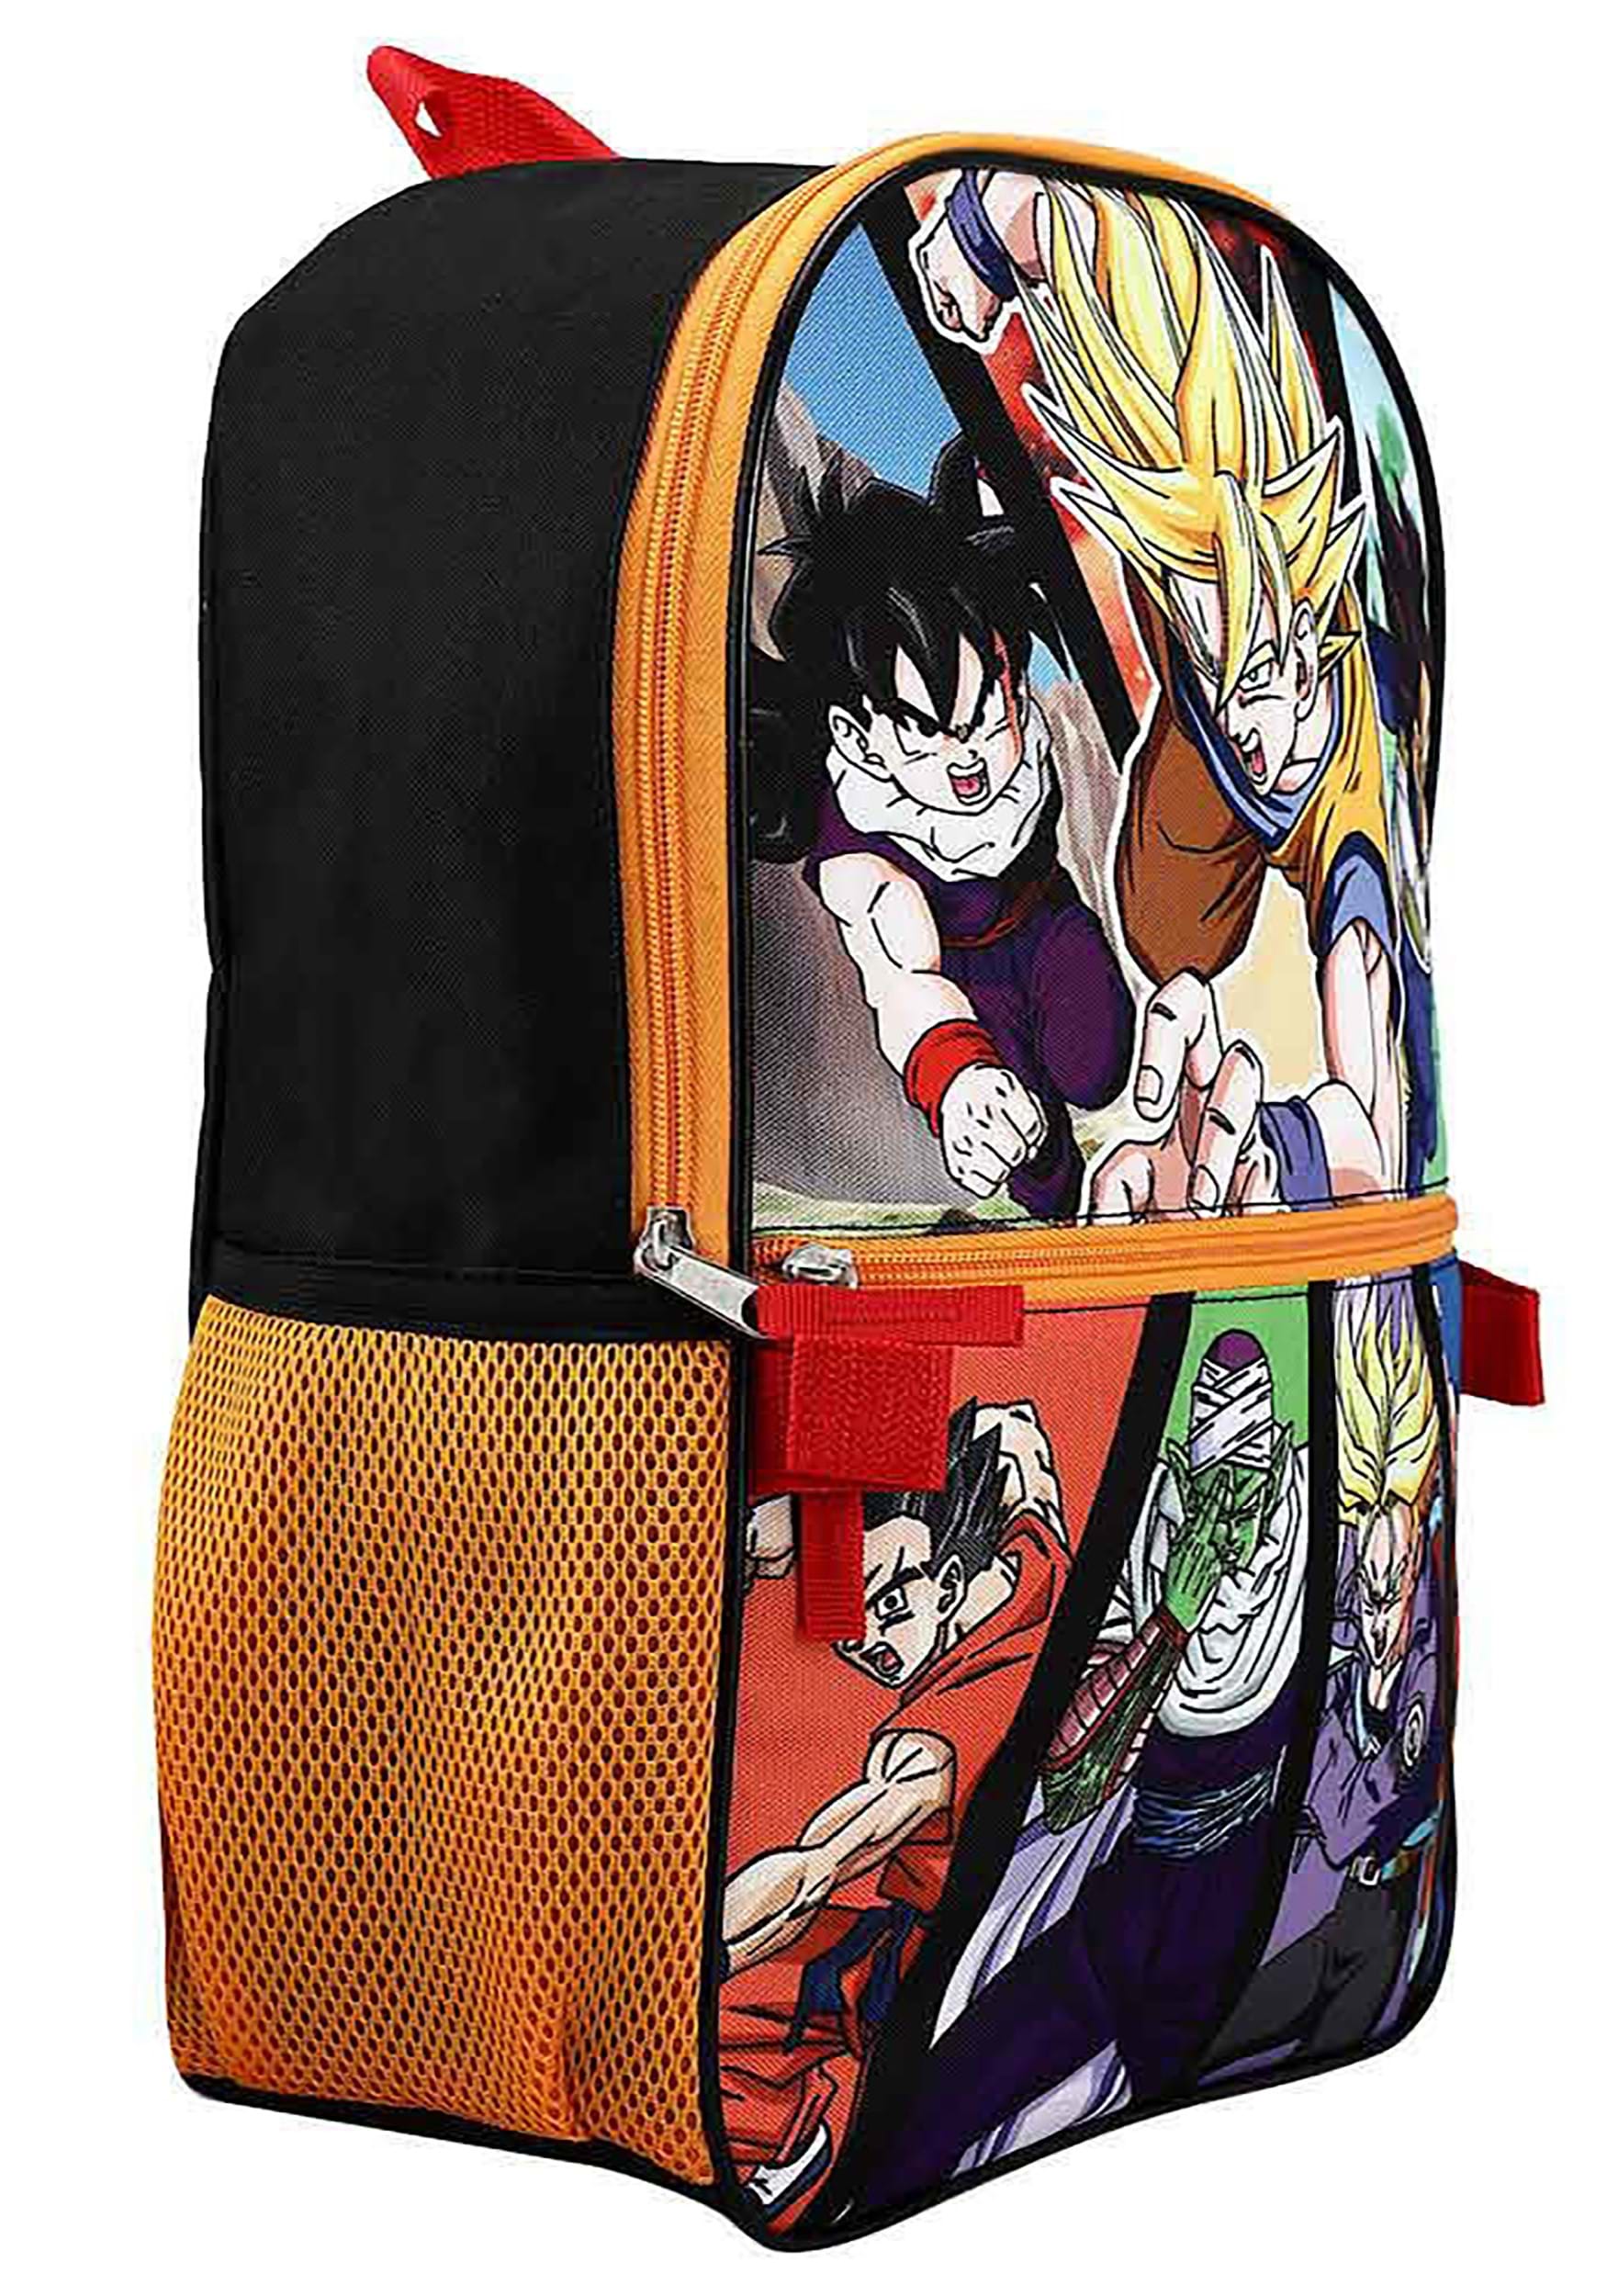 Dragon Ball Z Fabric Backpacks